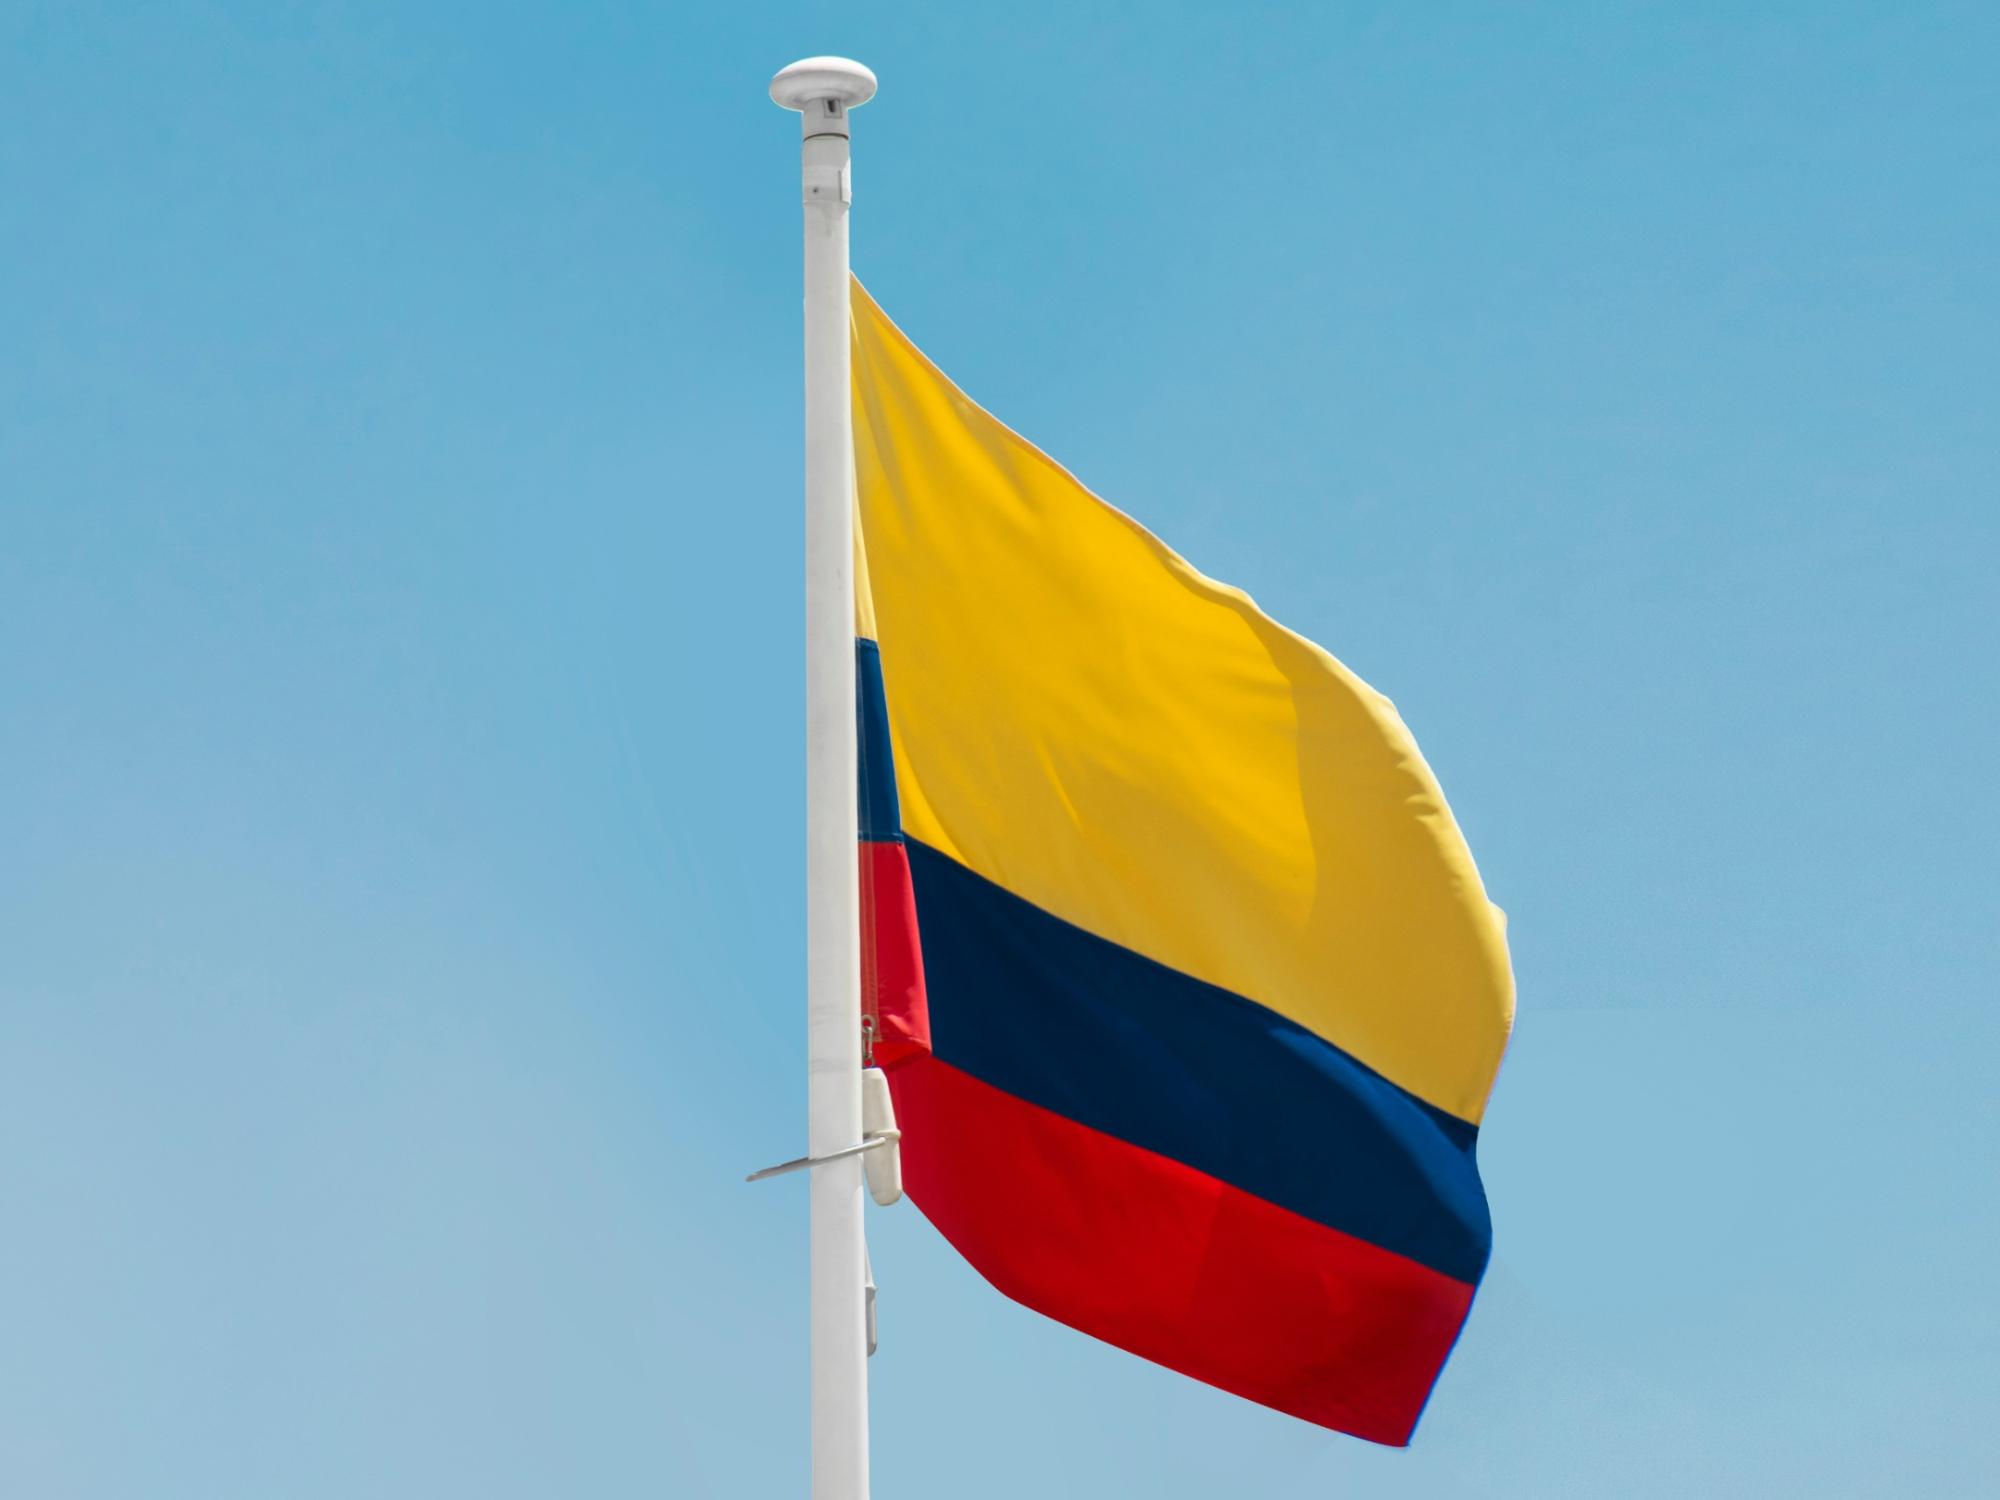 Kolumbien-Flagge